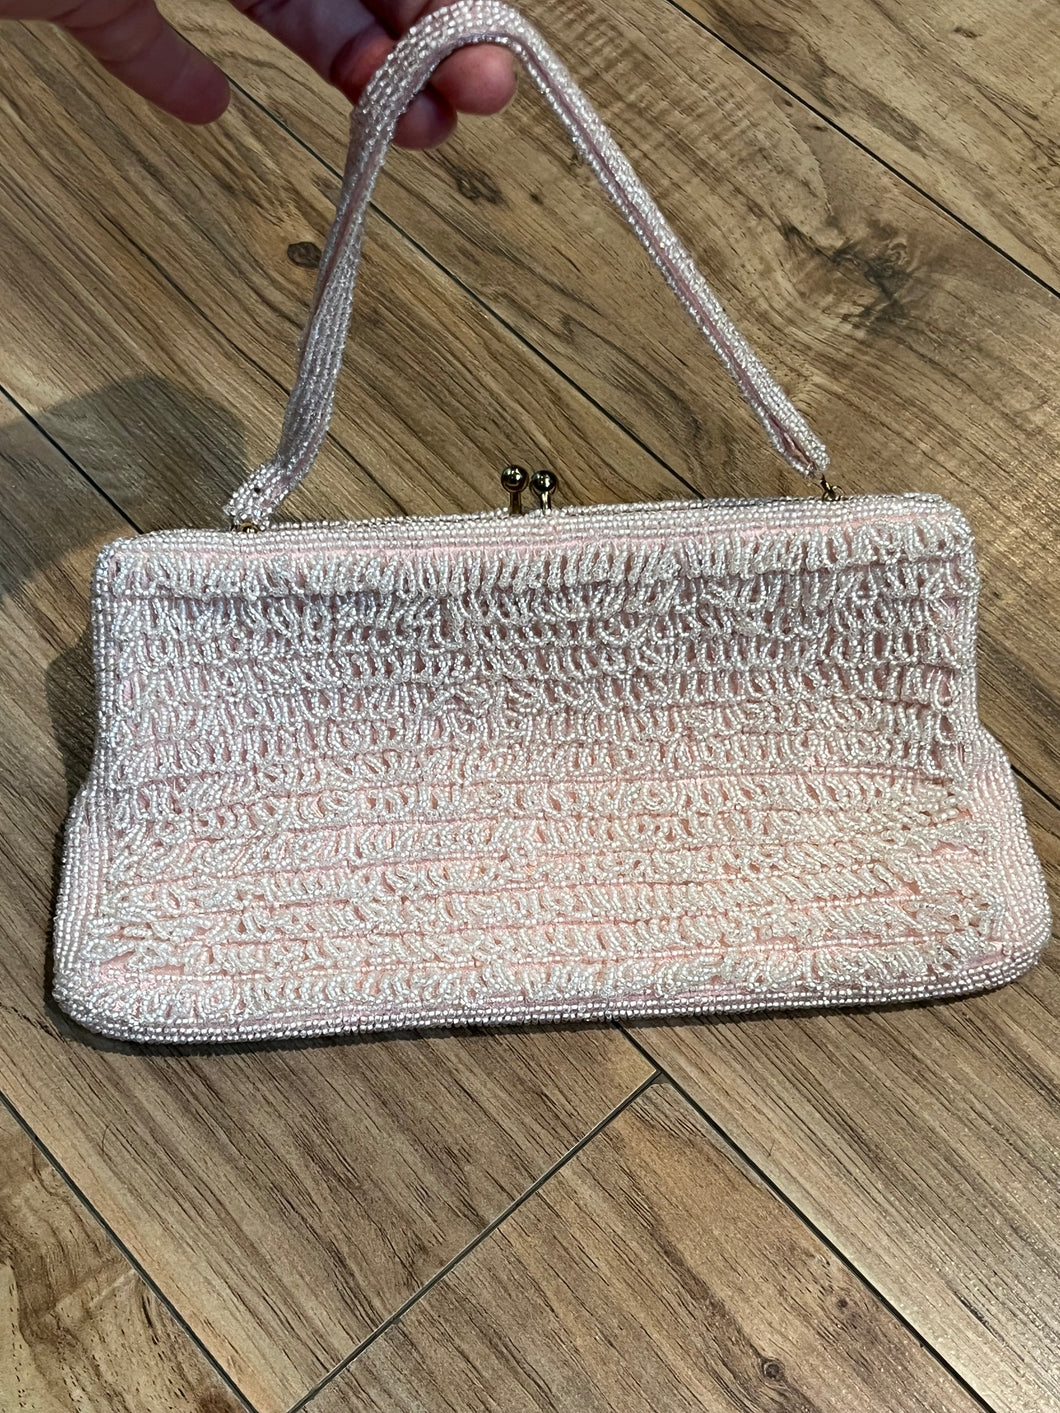 Vintage 60’s Walborg Light Pink Beaded Handbag, Made in Japan